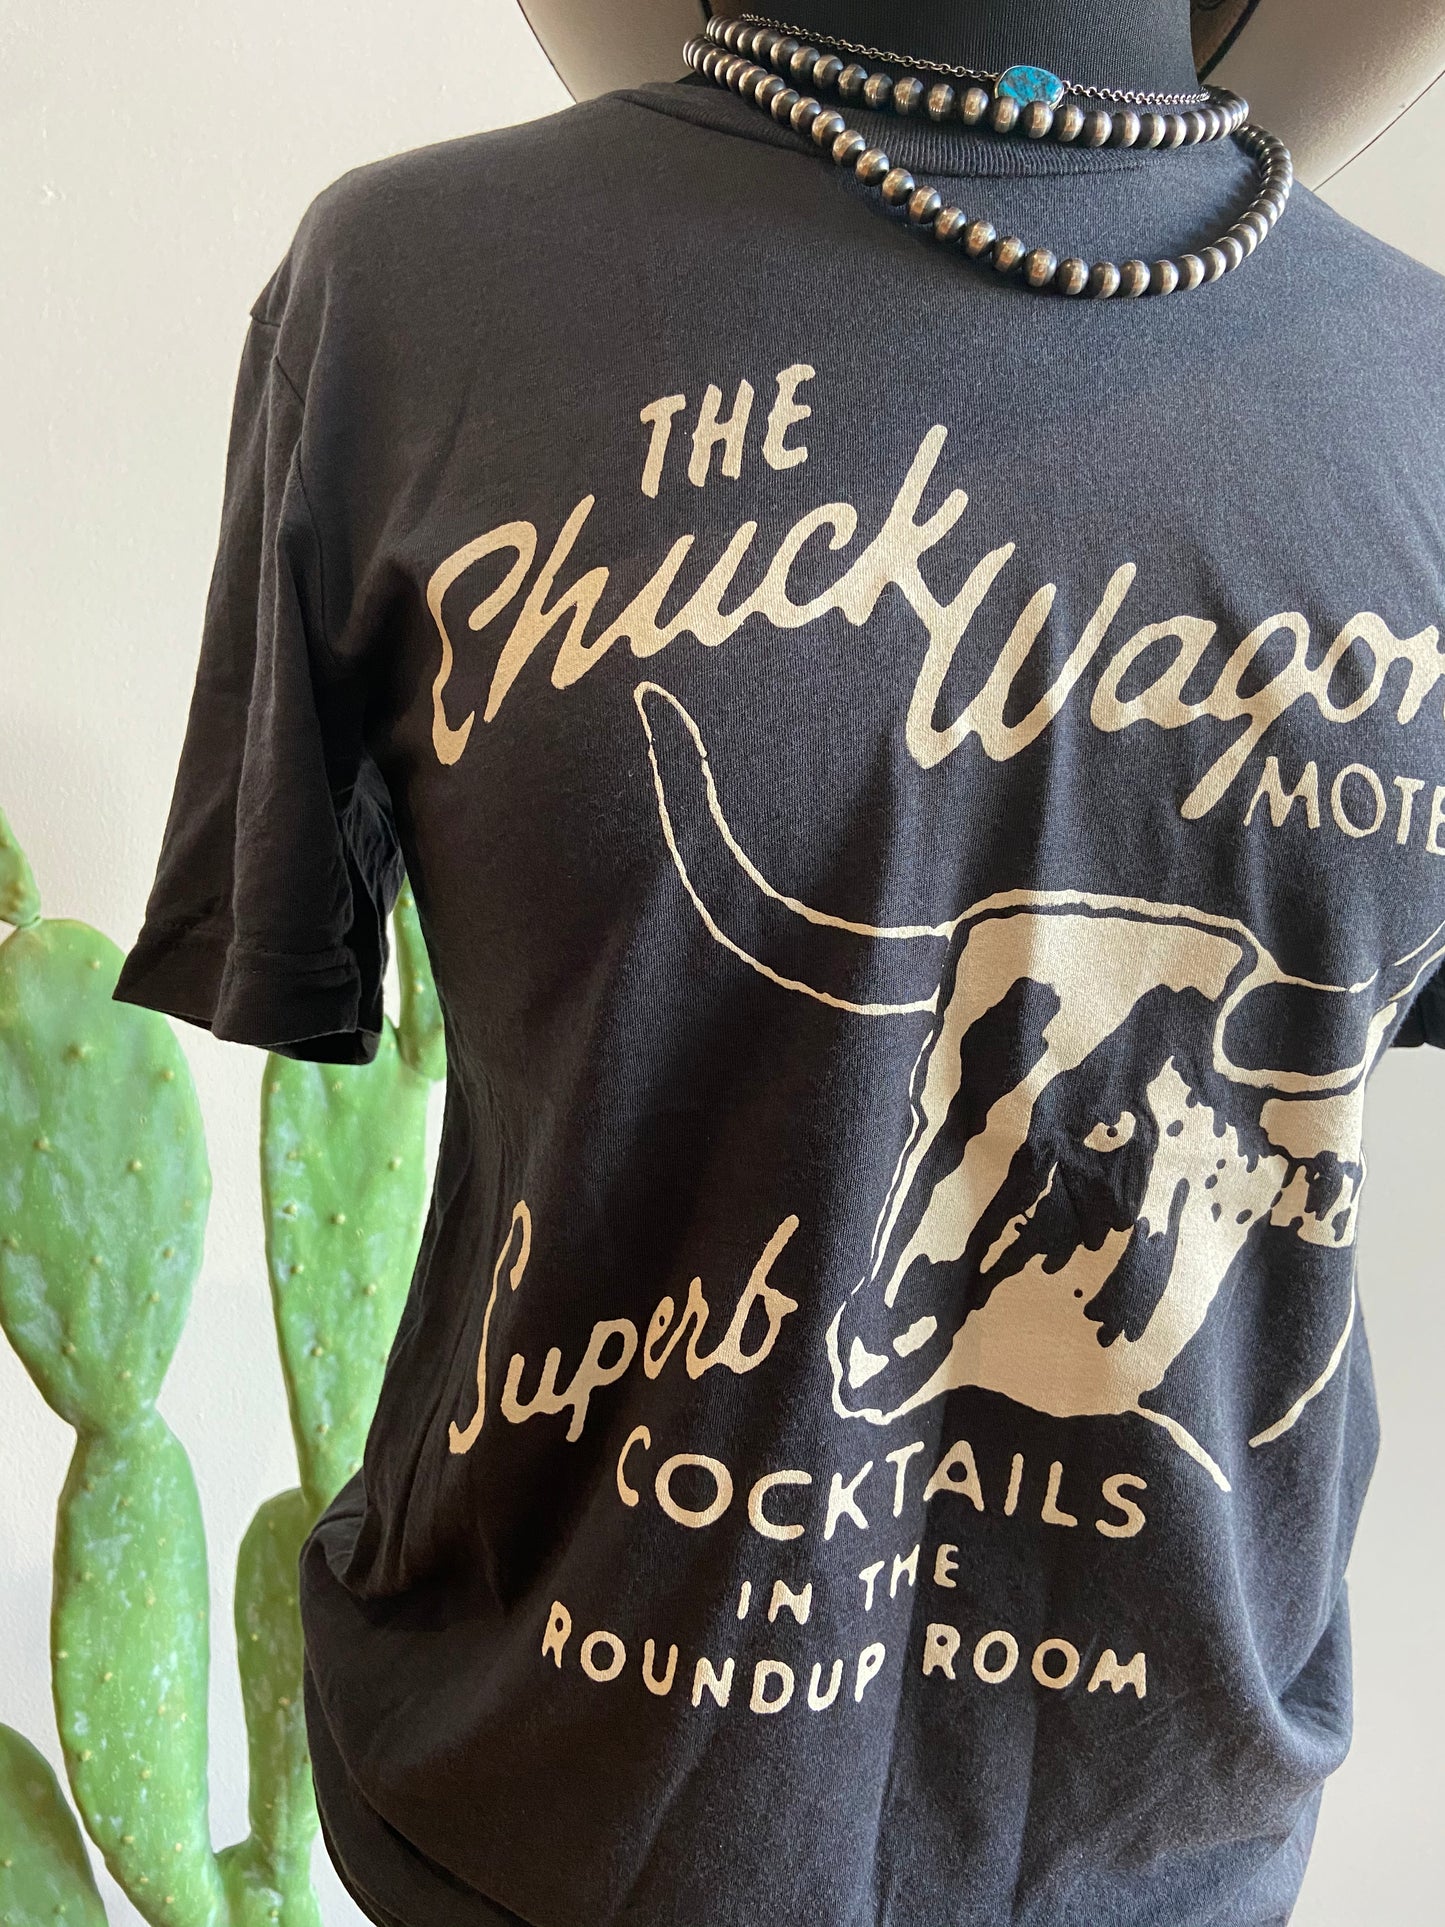 Chuck Wagon Motel Grey Graphic T-shirt 6Whiskey Fall 2020